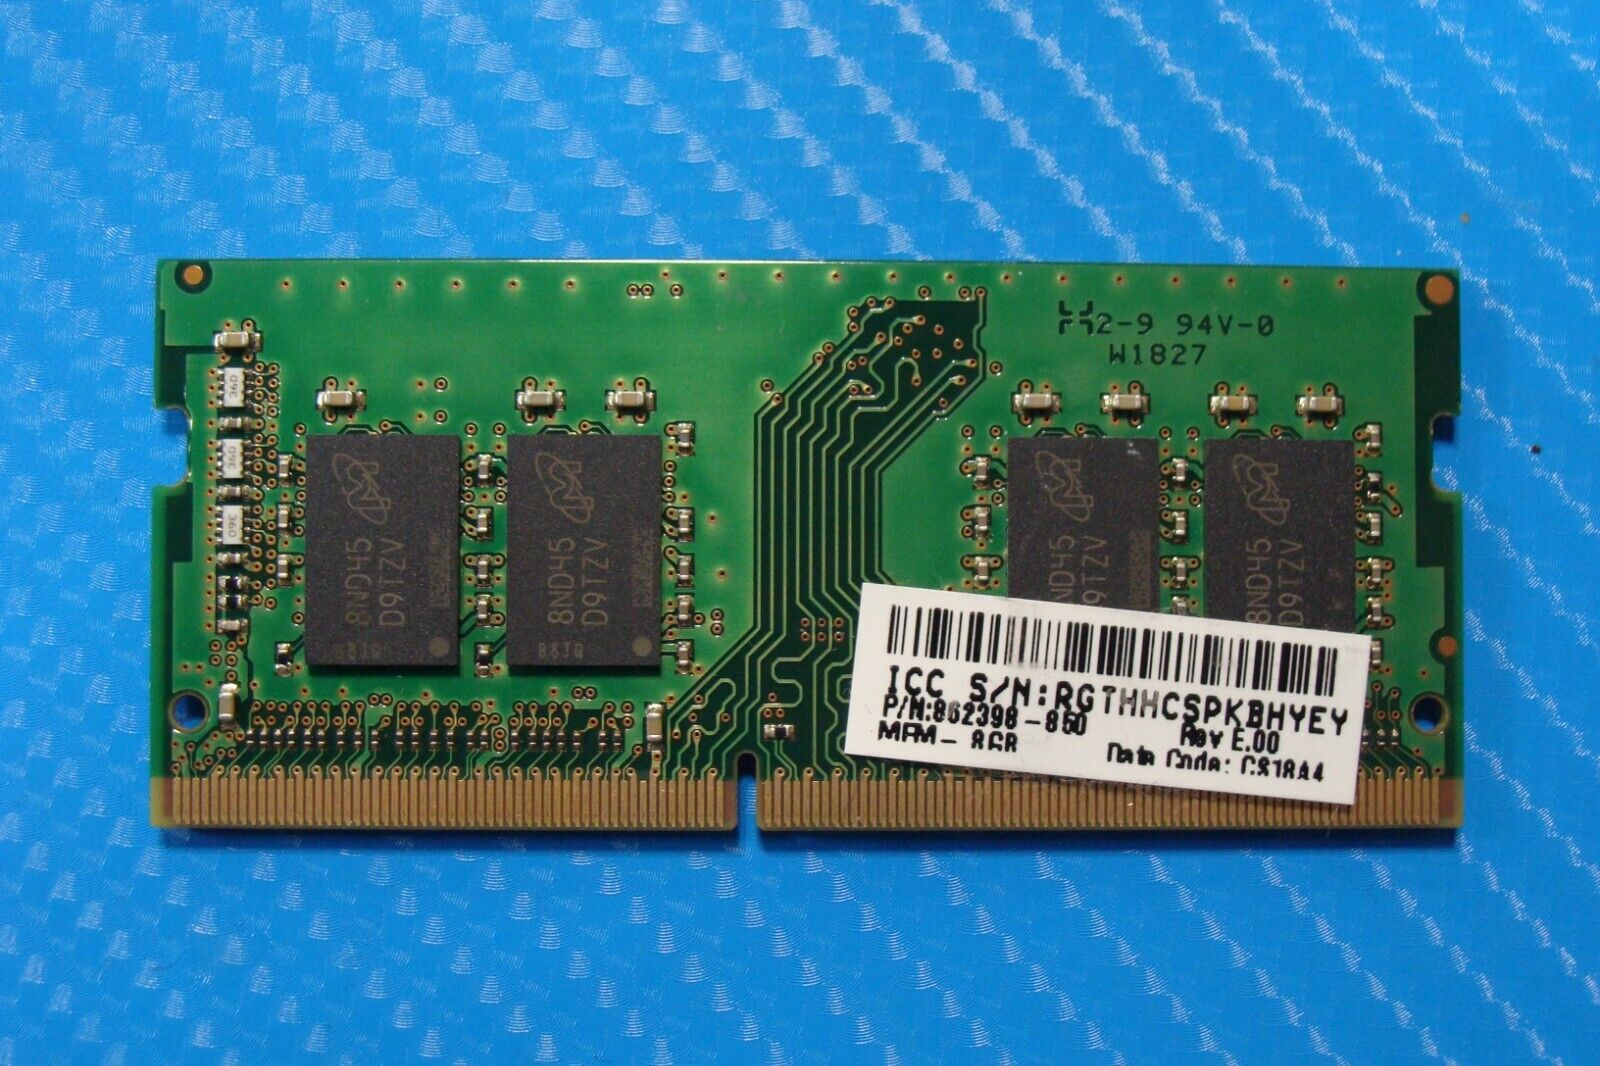 Dell 3500 Kingston 8GB 1Rx8 PC4-2666V SO-DIMM Memory RAM HP26D4S9S8MD-8